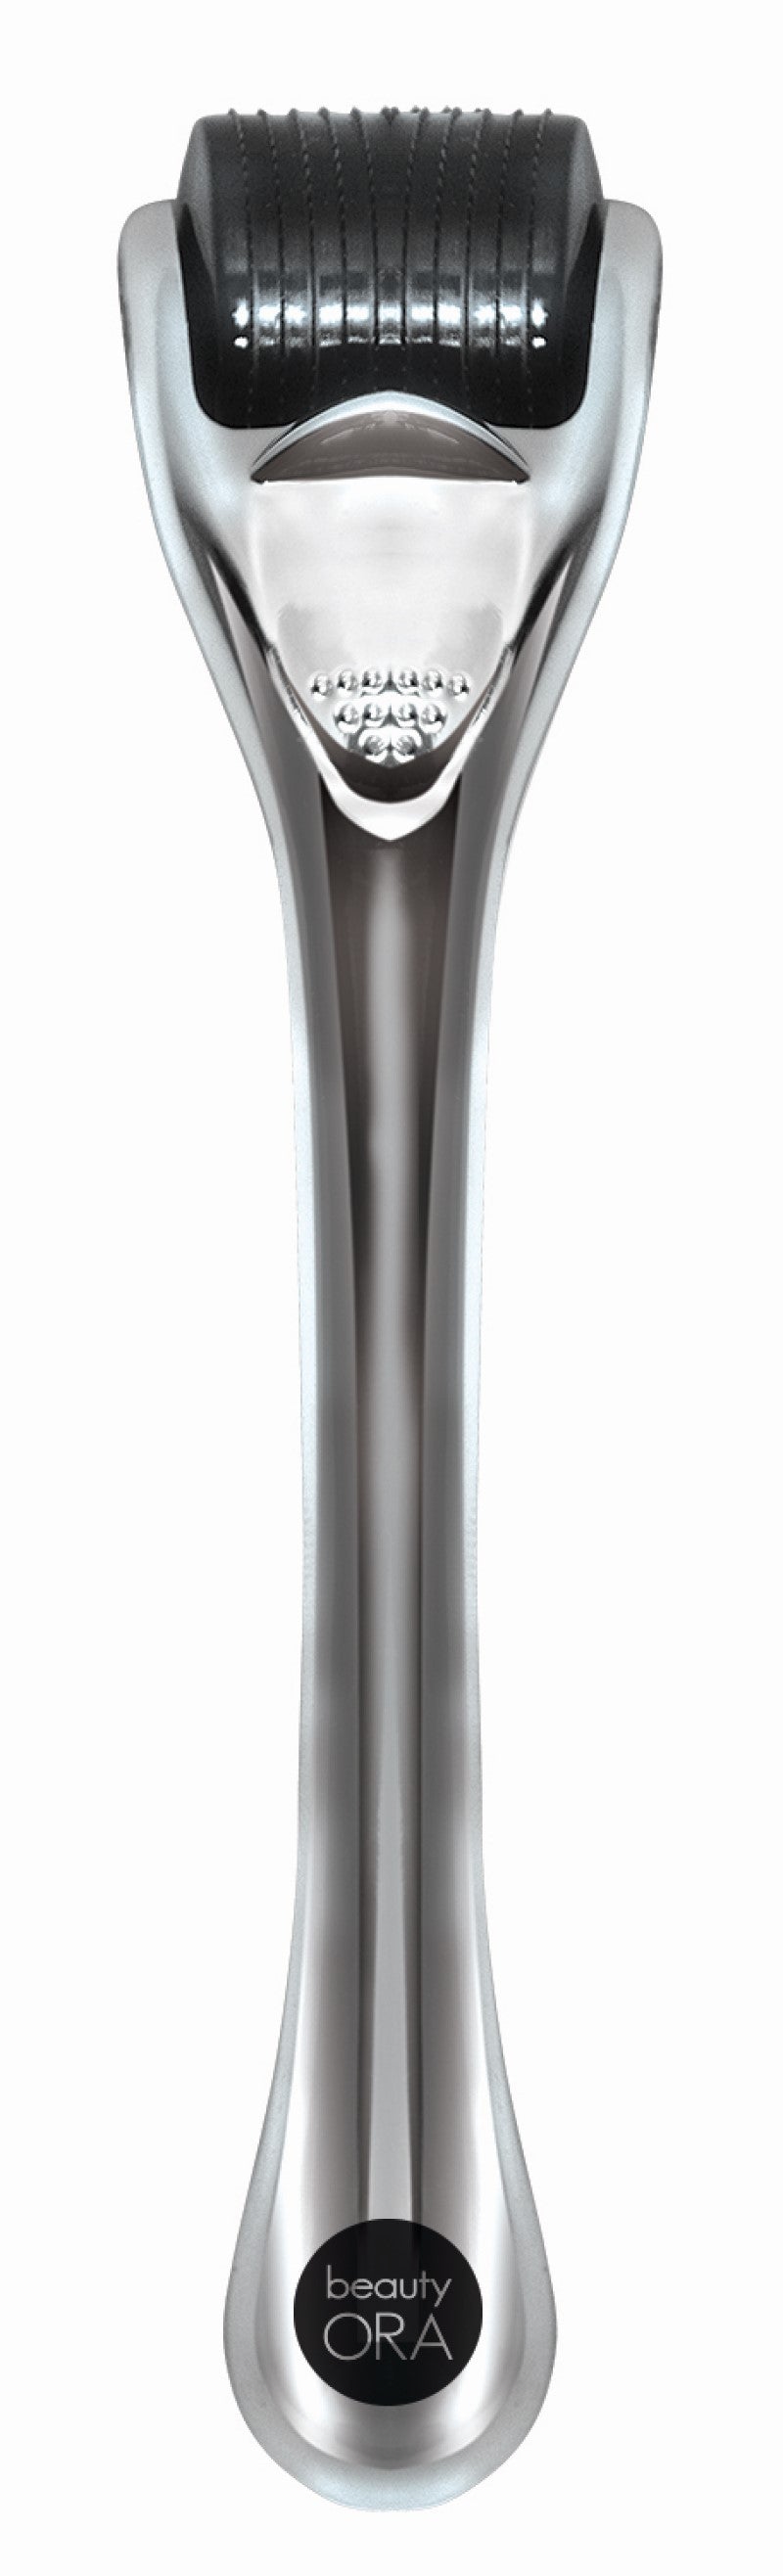 ORA Silver Deluxe Microneedle Dermal Roller System - SILVER Handle/Black Head (0.25mm)